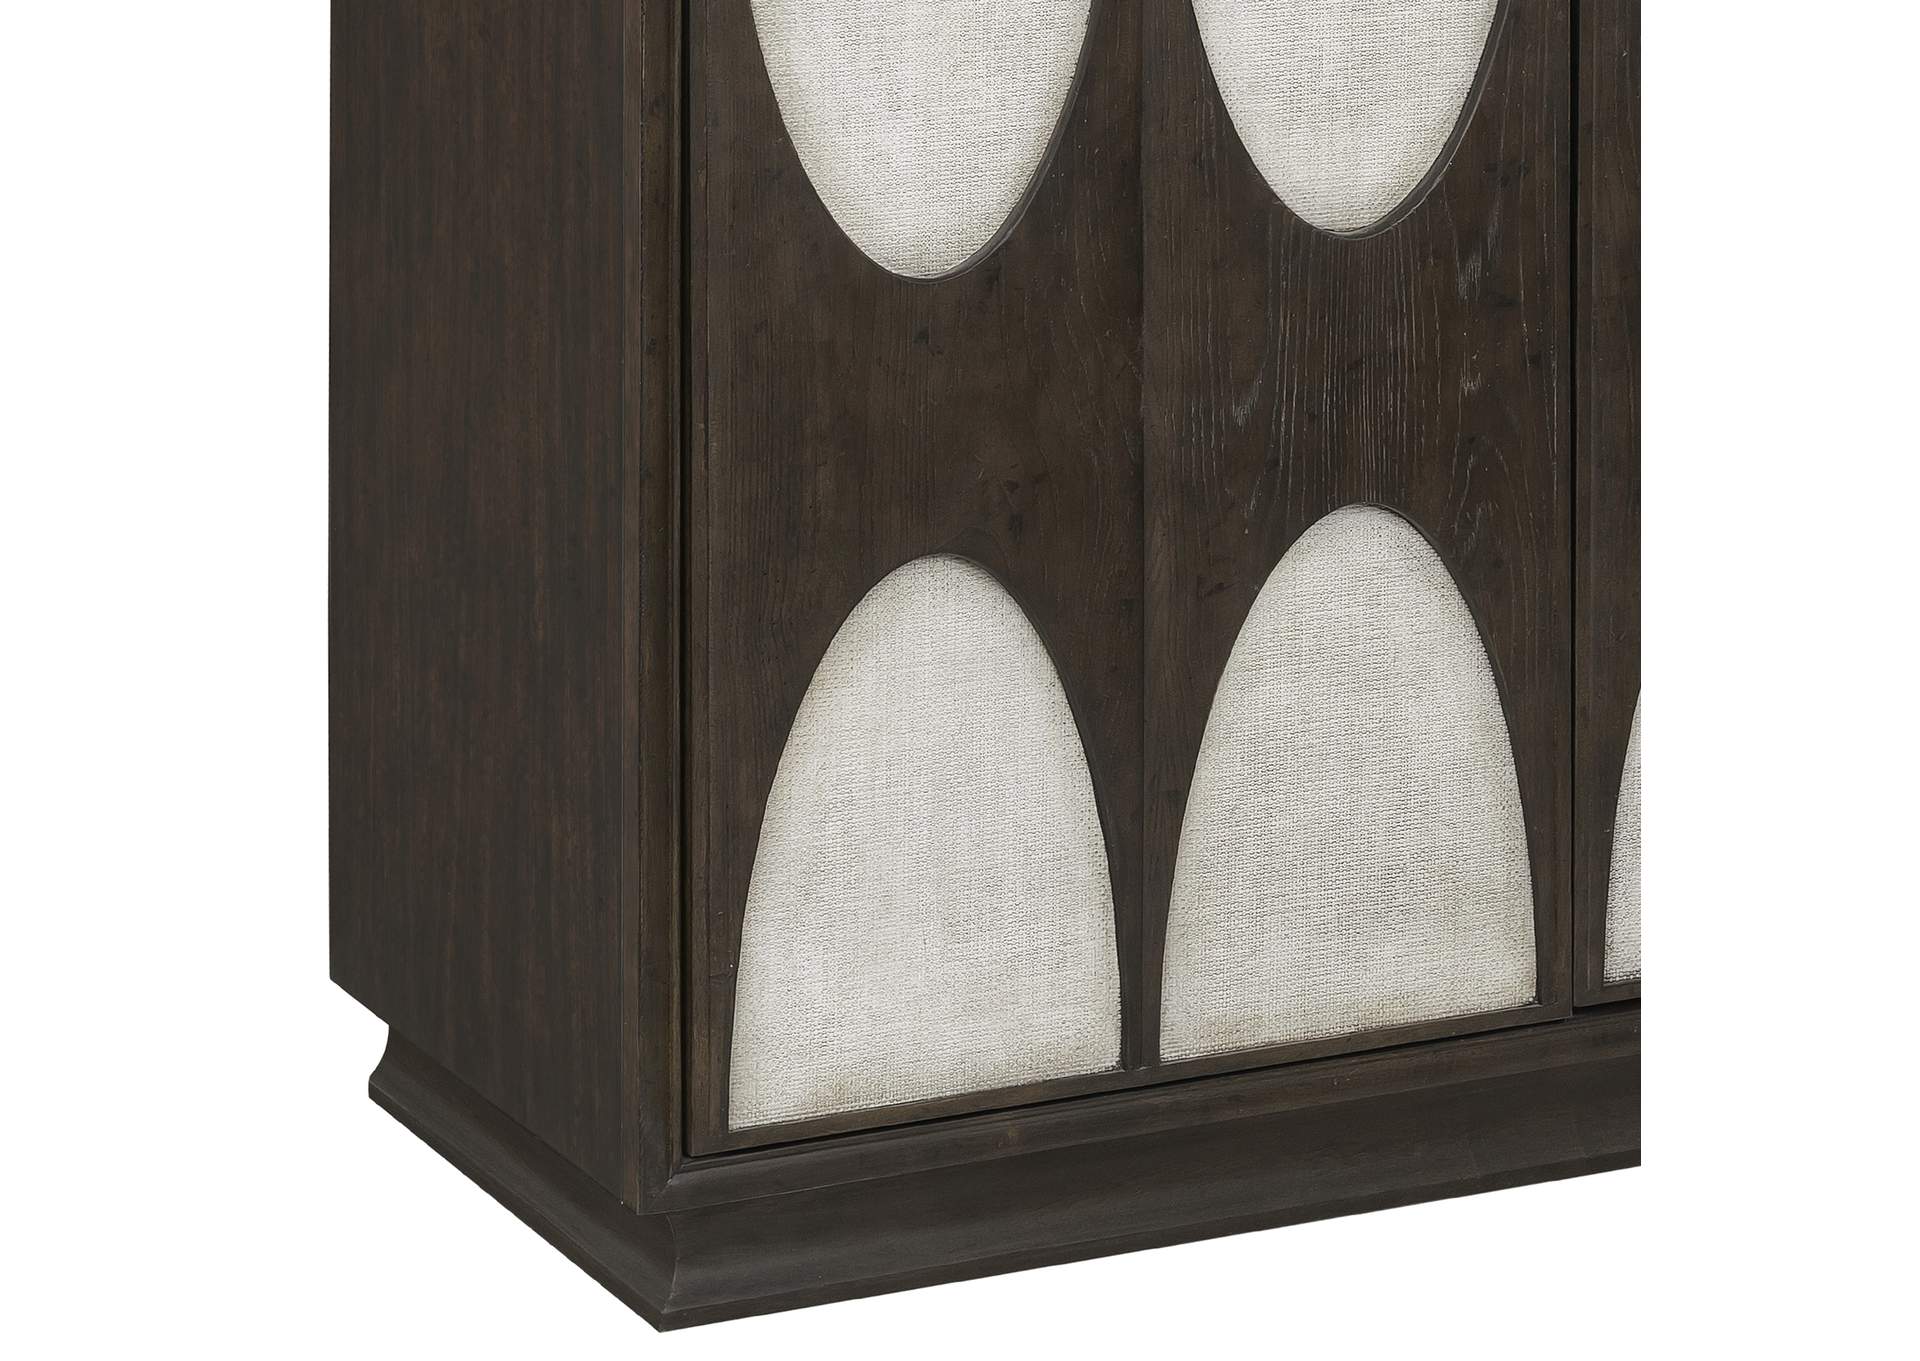 2 Door Wine Storage Bar Cabinet,Pulaski Furniture